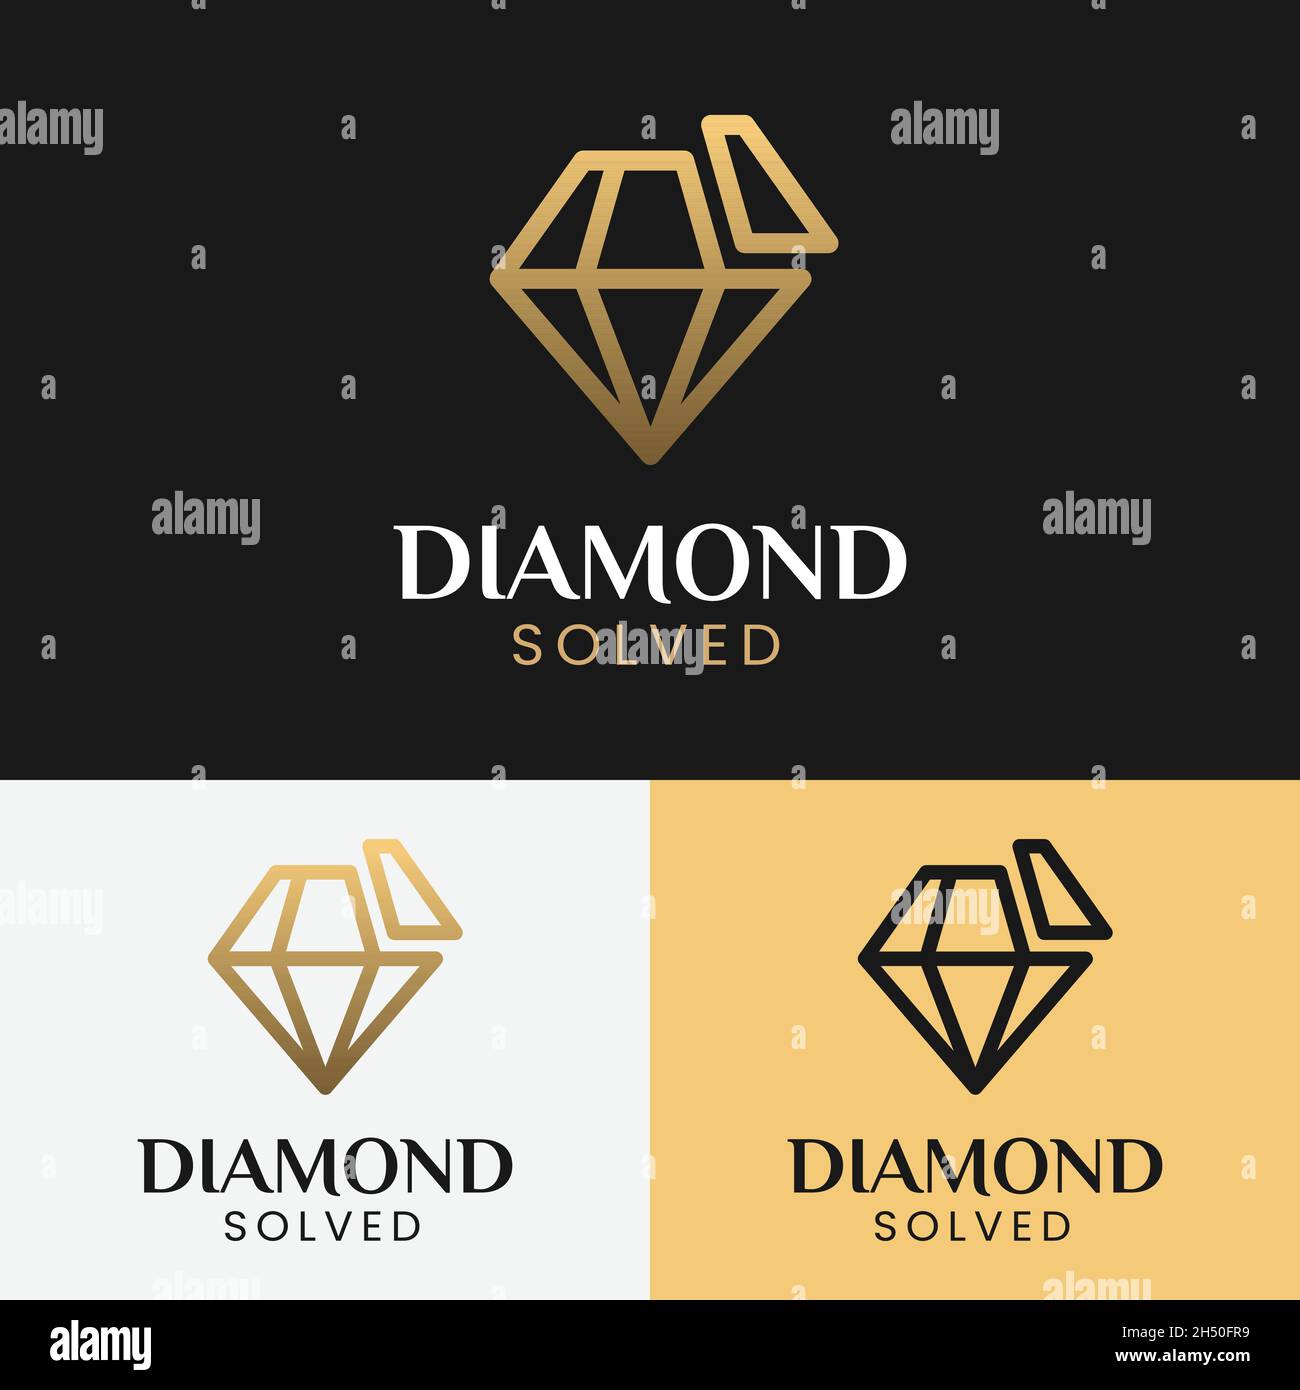 Diamond Solved in Line Style Logo Design Template. Geeignet für Schmuck Schmuck Mode Boutique Bekleidung Shop Store Business Brand Company Logo. Stock Vektor